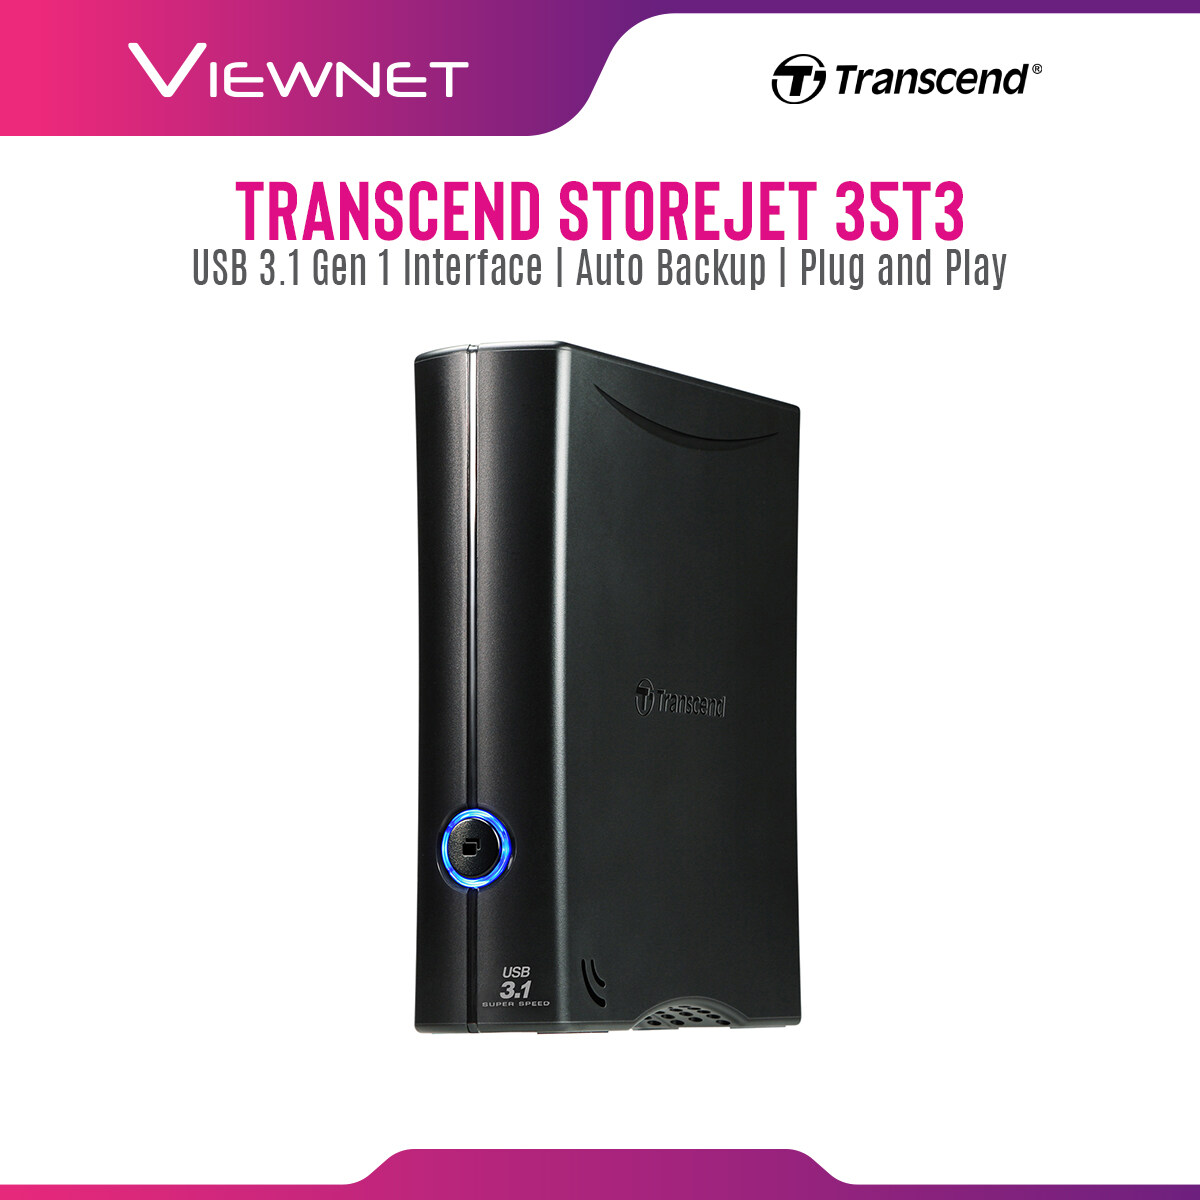 Transcend Desktop External Drive StoreJet 35T3 with USB 3.1 Gen 1 Connection, Auto Backup, Plug and Play